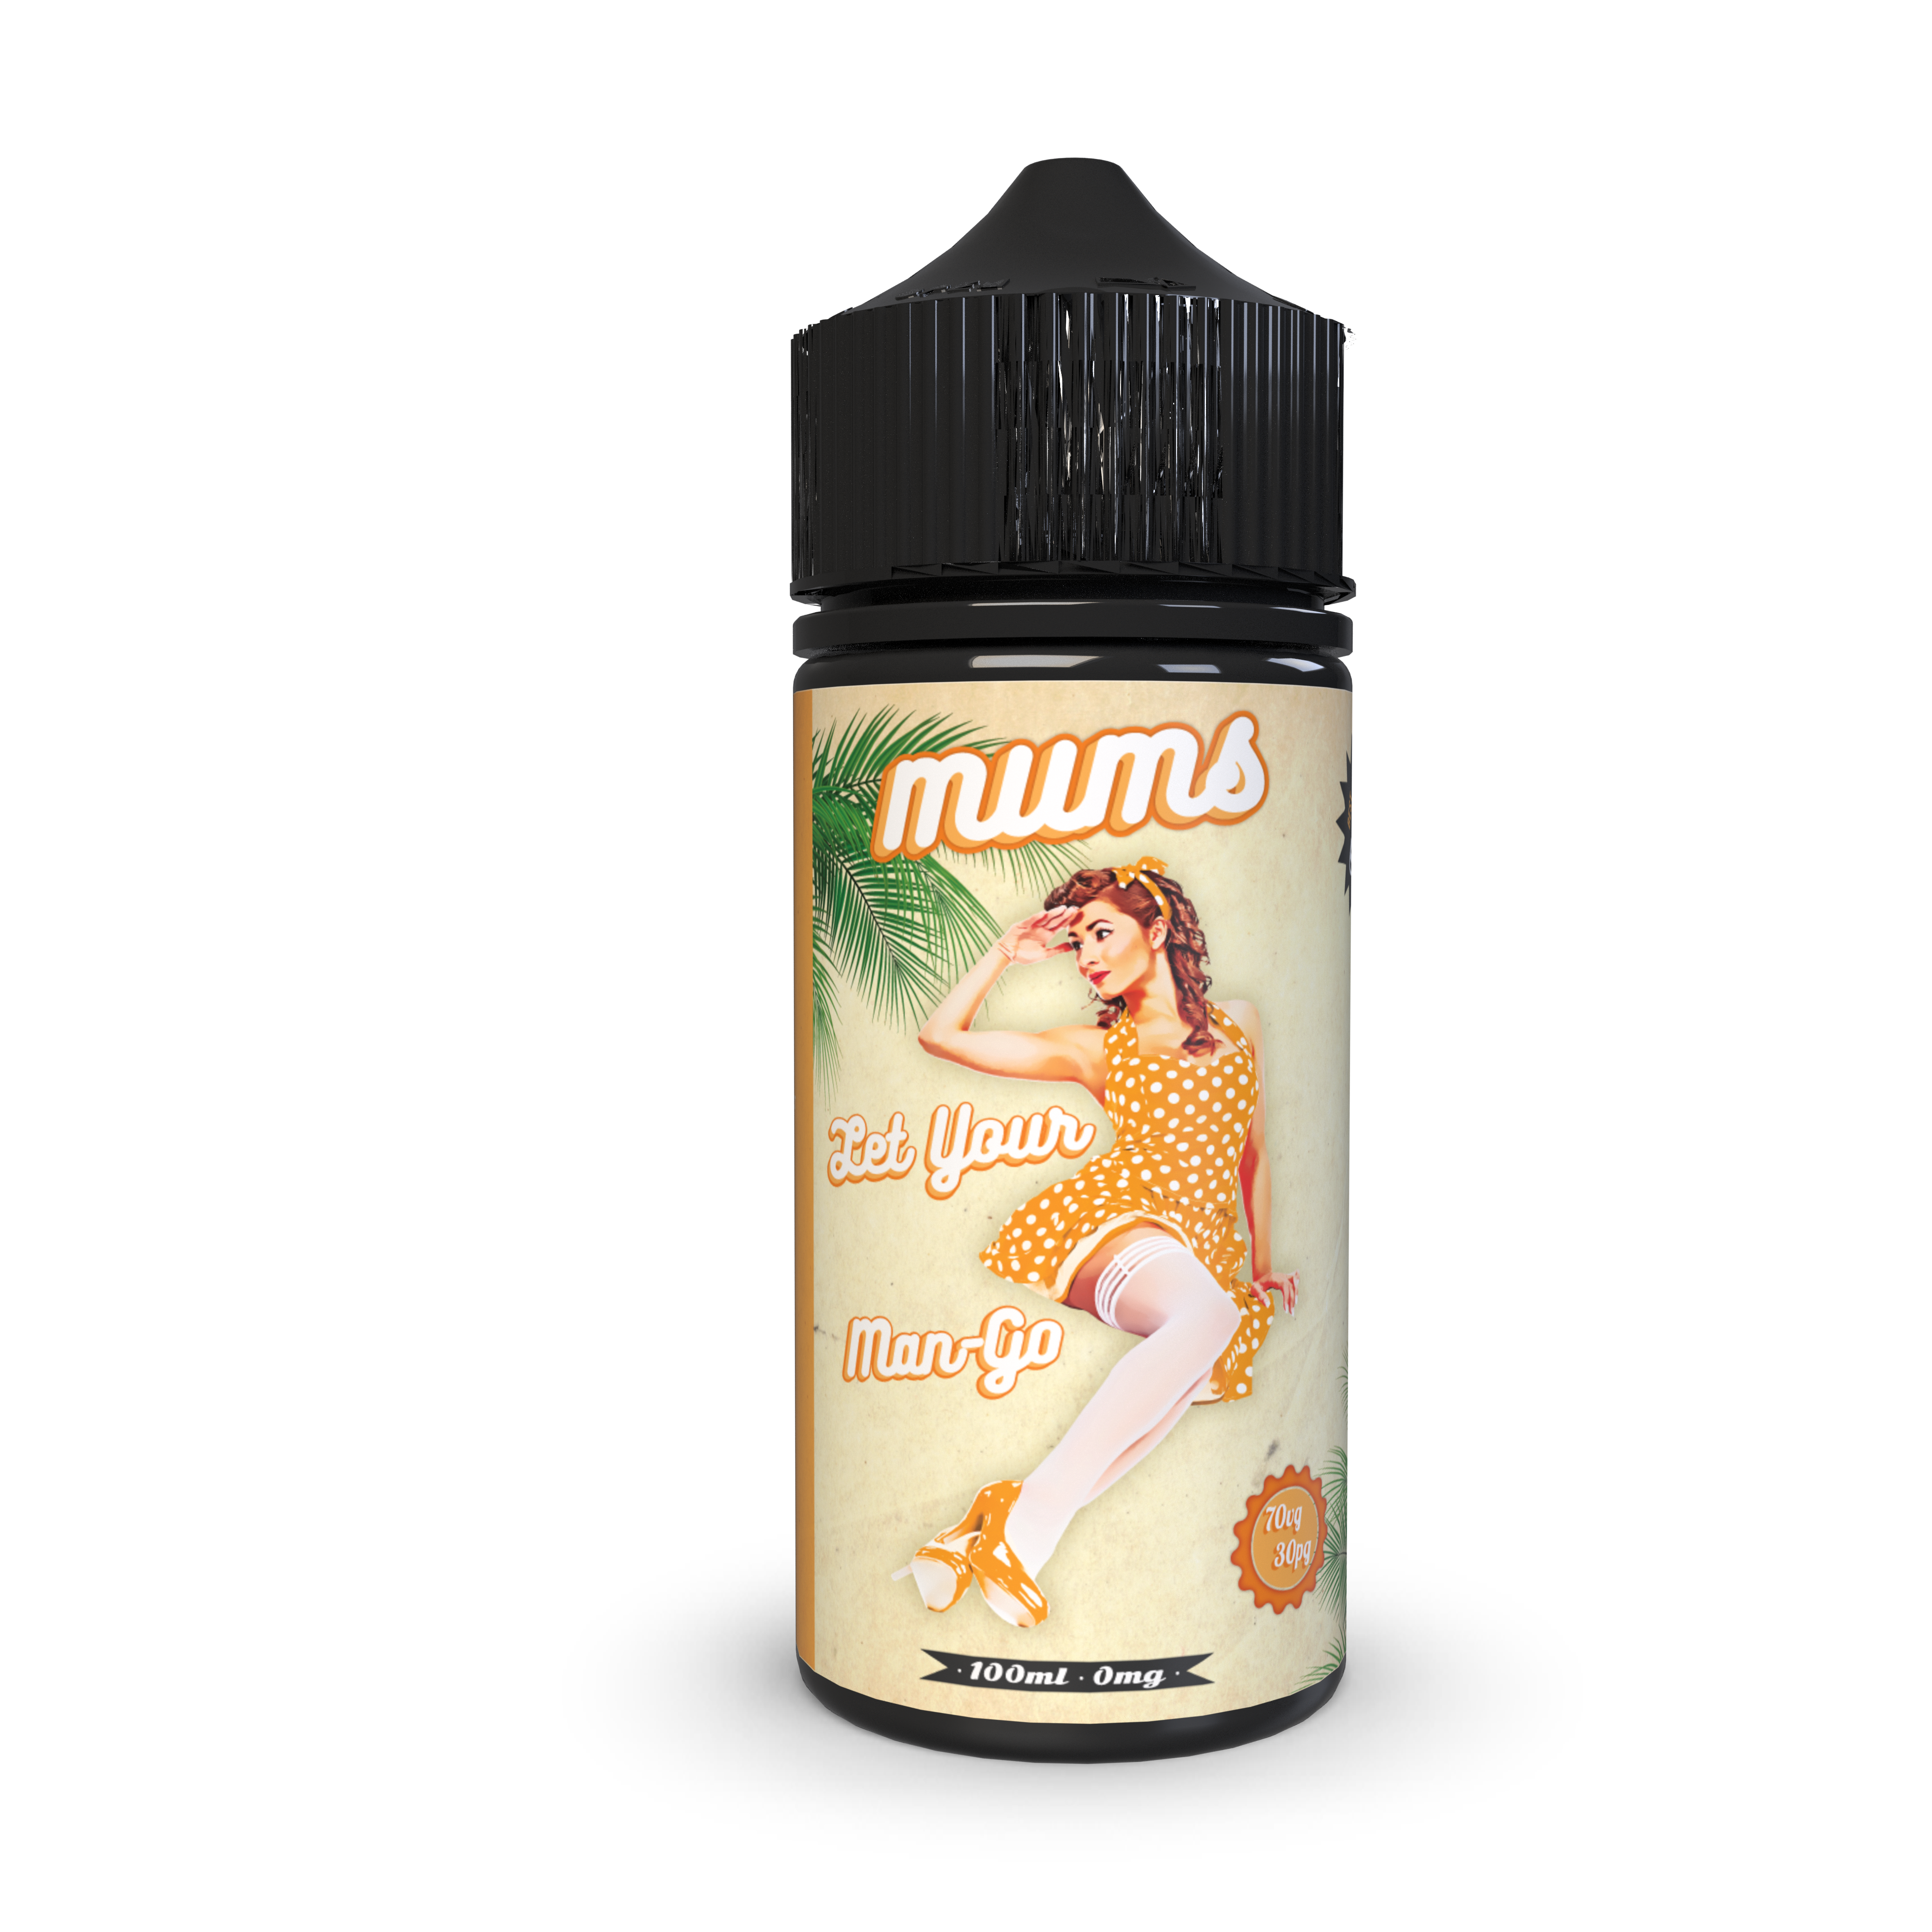 Mums Premium E-liquid | Let your Man-go | Wholesale